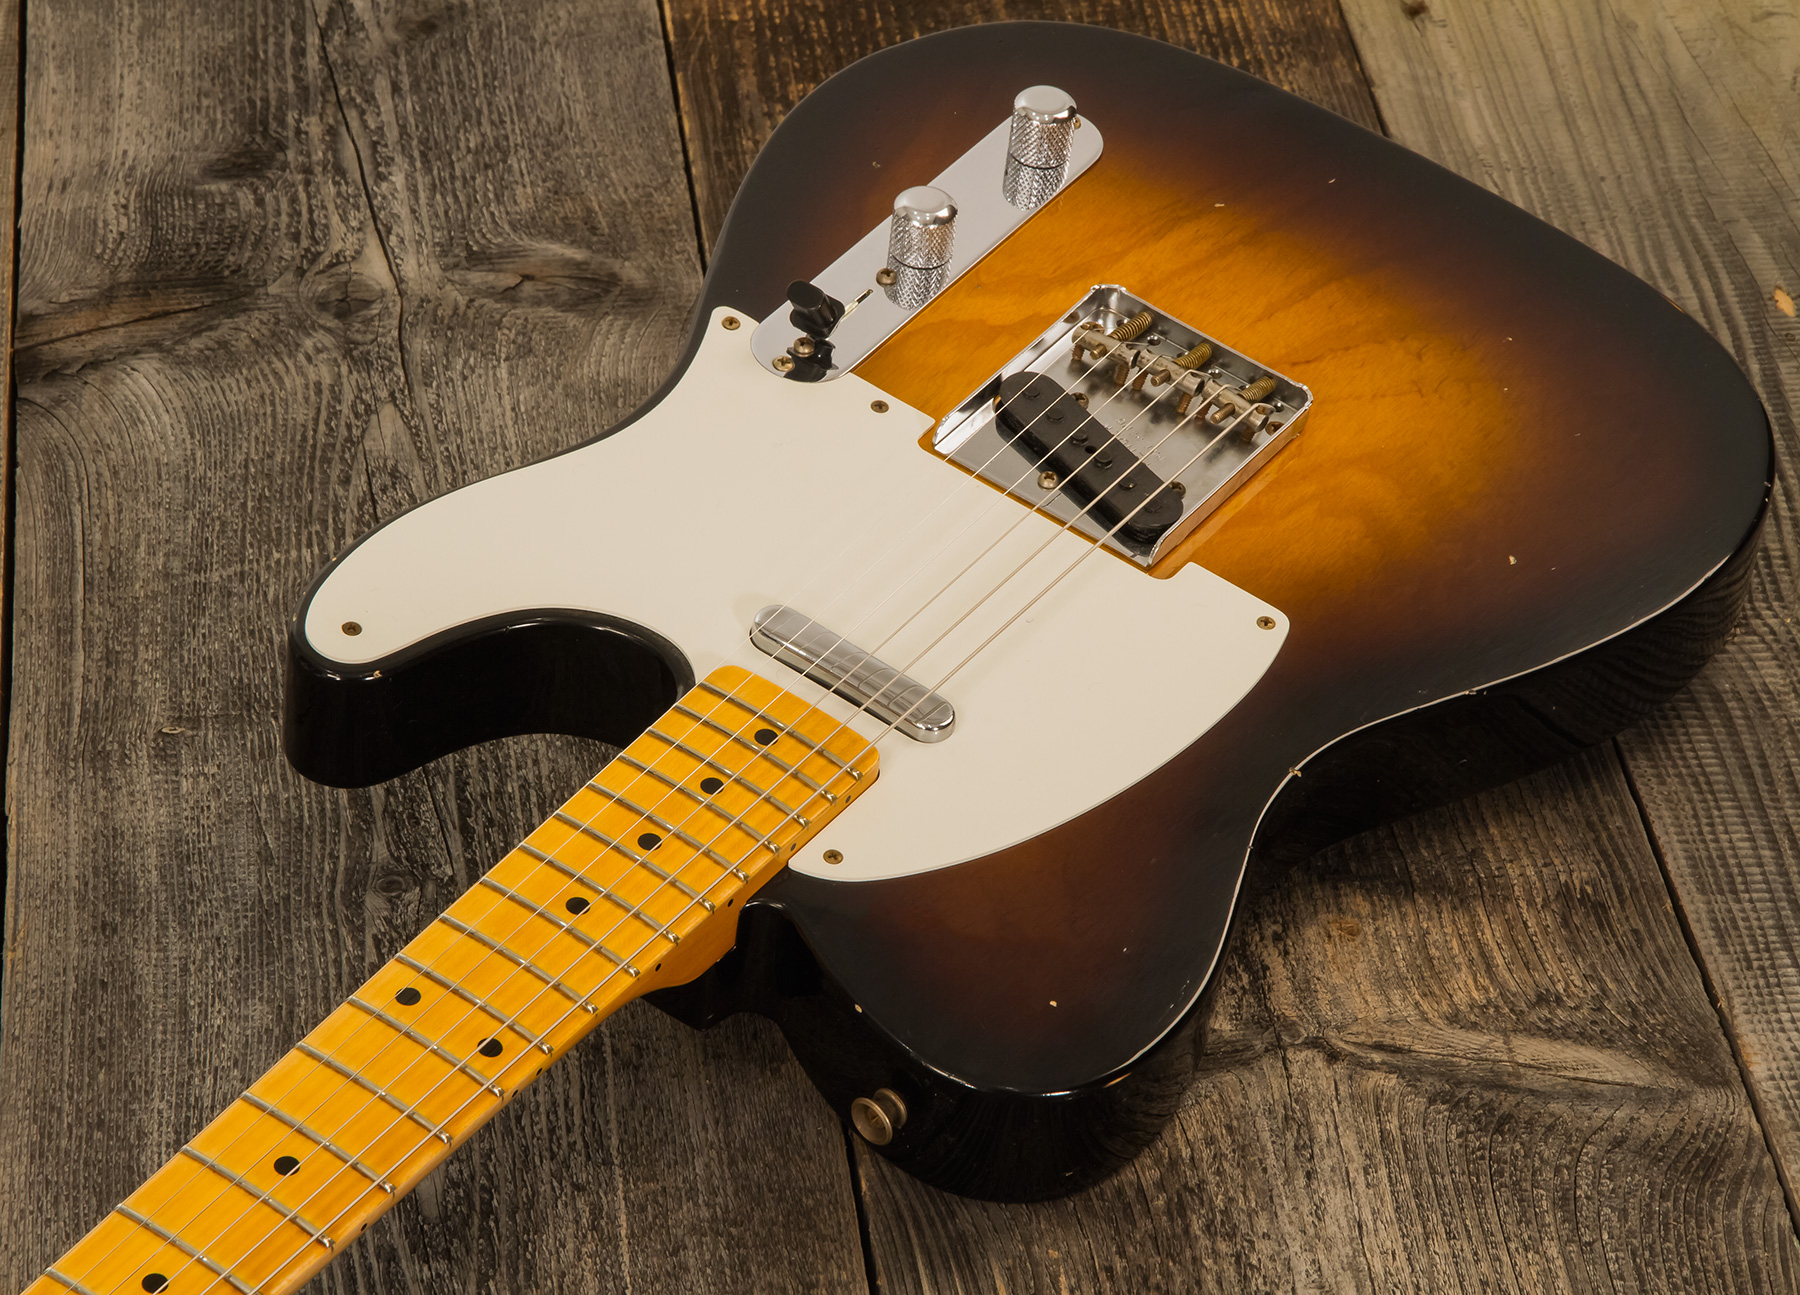 Fender Custom Shop Tele 1955 Ltd 2s Ht Mn #cz560649 - Relic Wide Fade 2-color Sunburst - Tel shape electric guitar - Variation 2